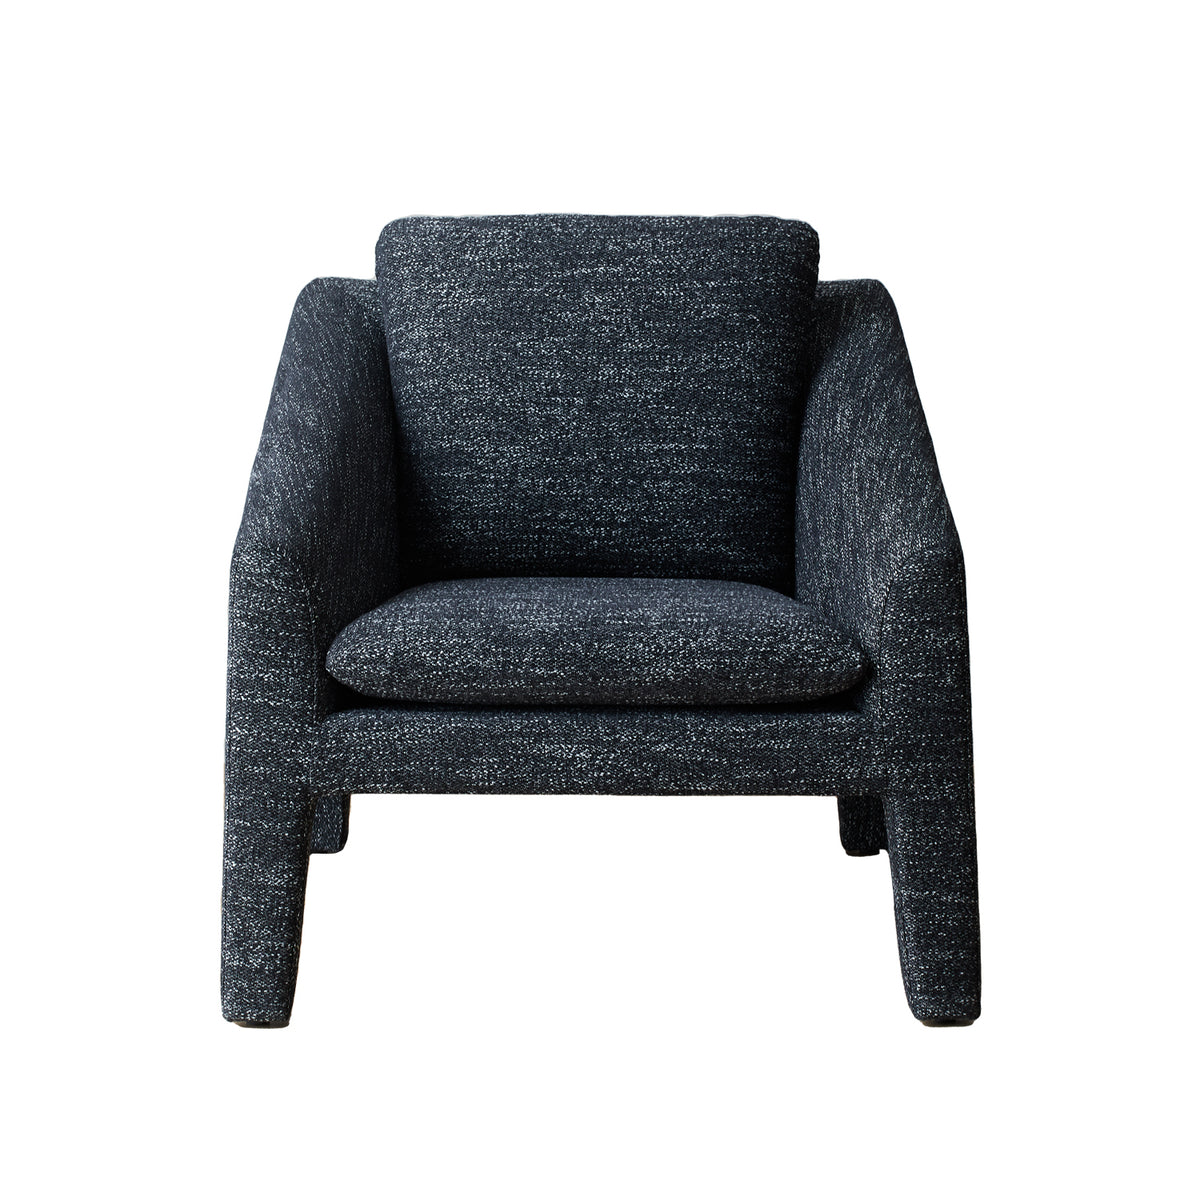 Guardian Lounge Chair